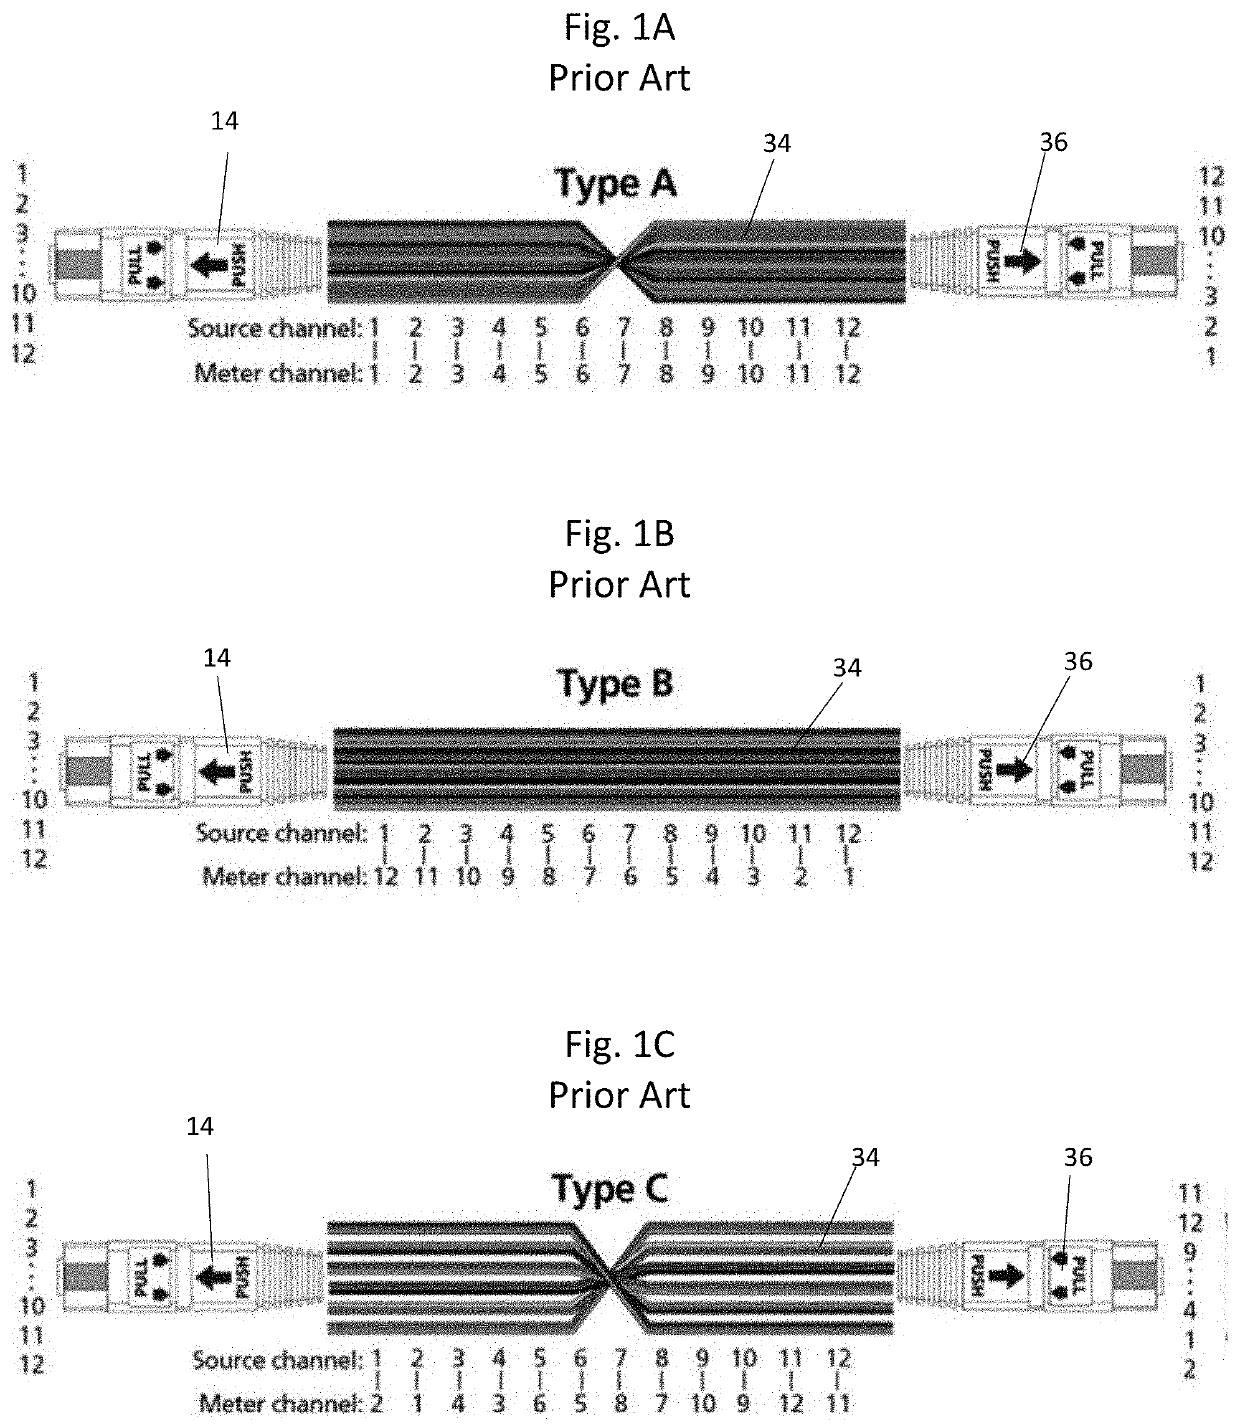 Multi-fiber connector visual polarity and continuity tester